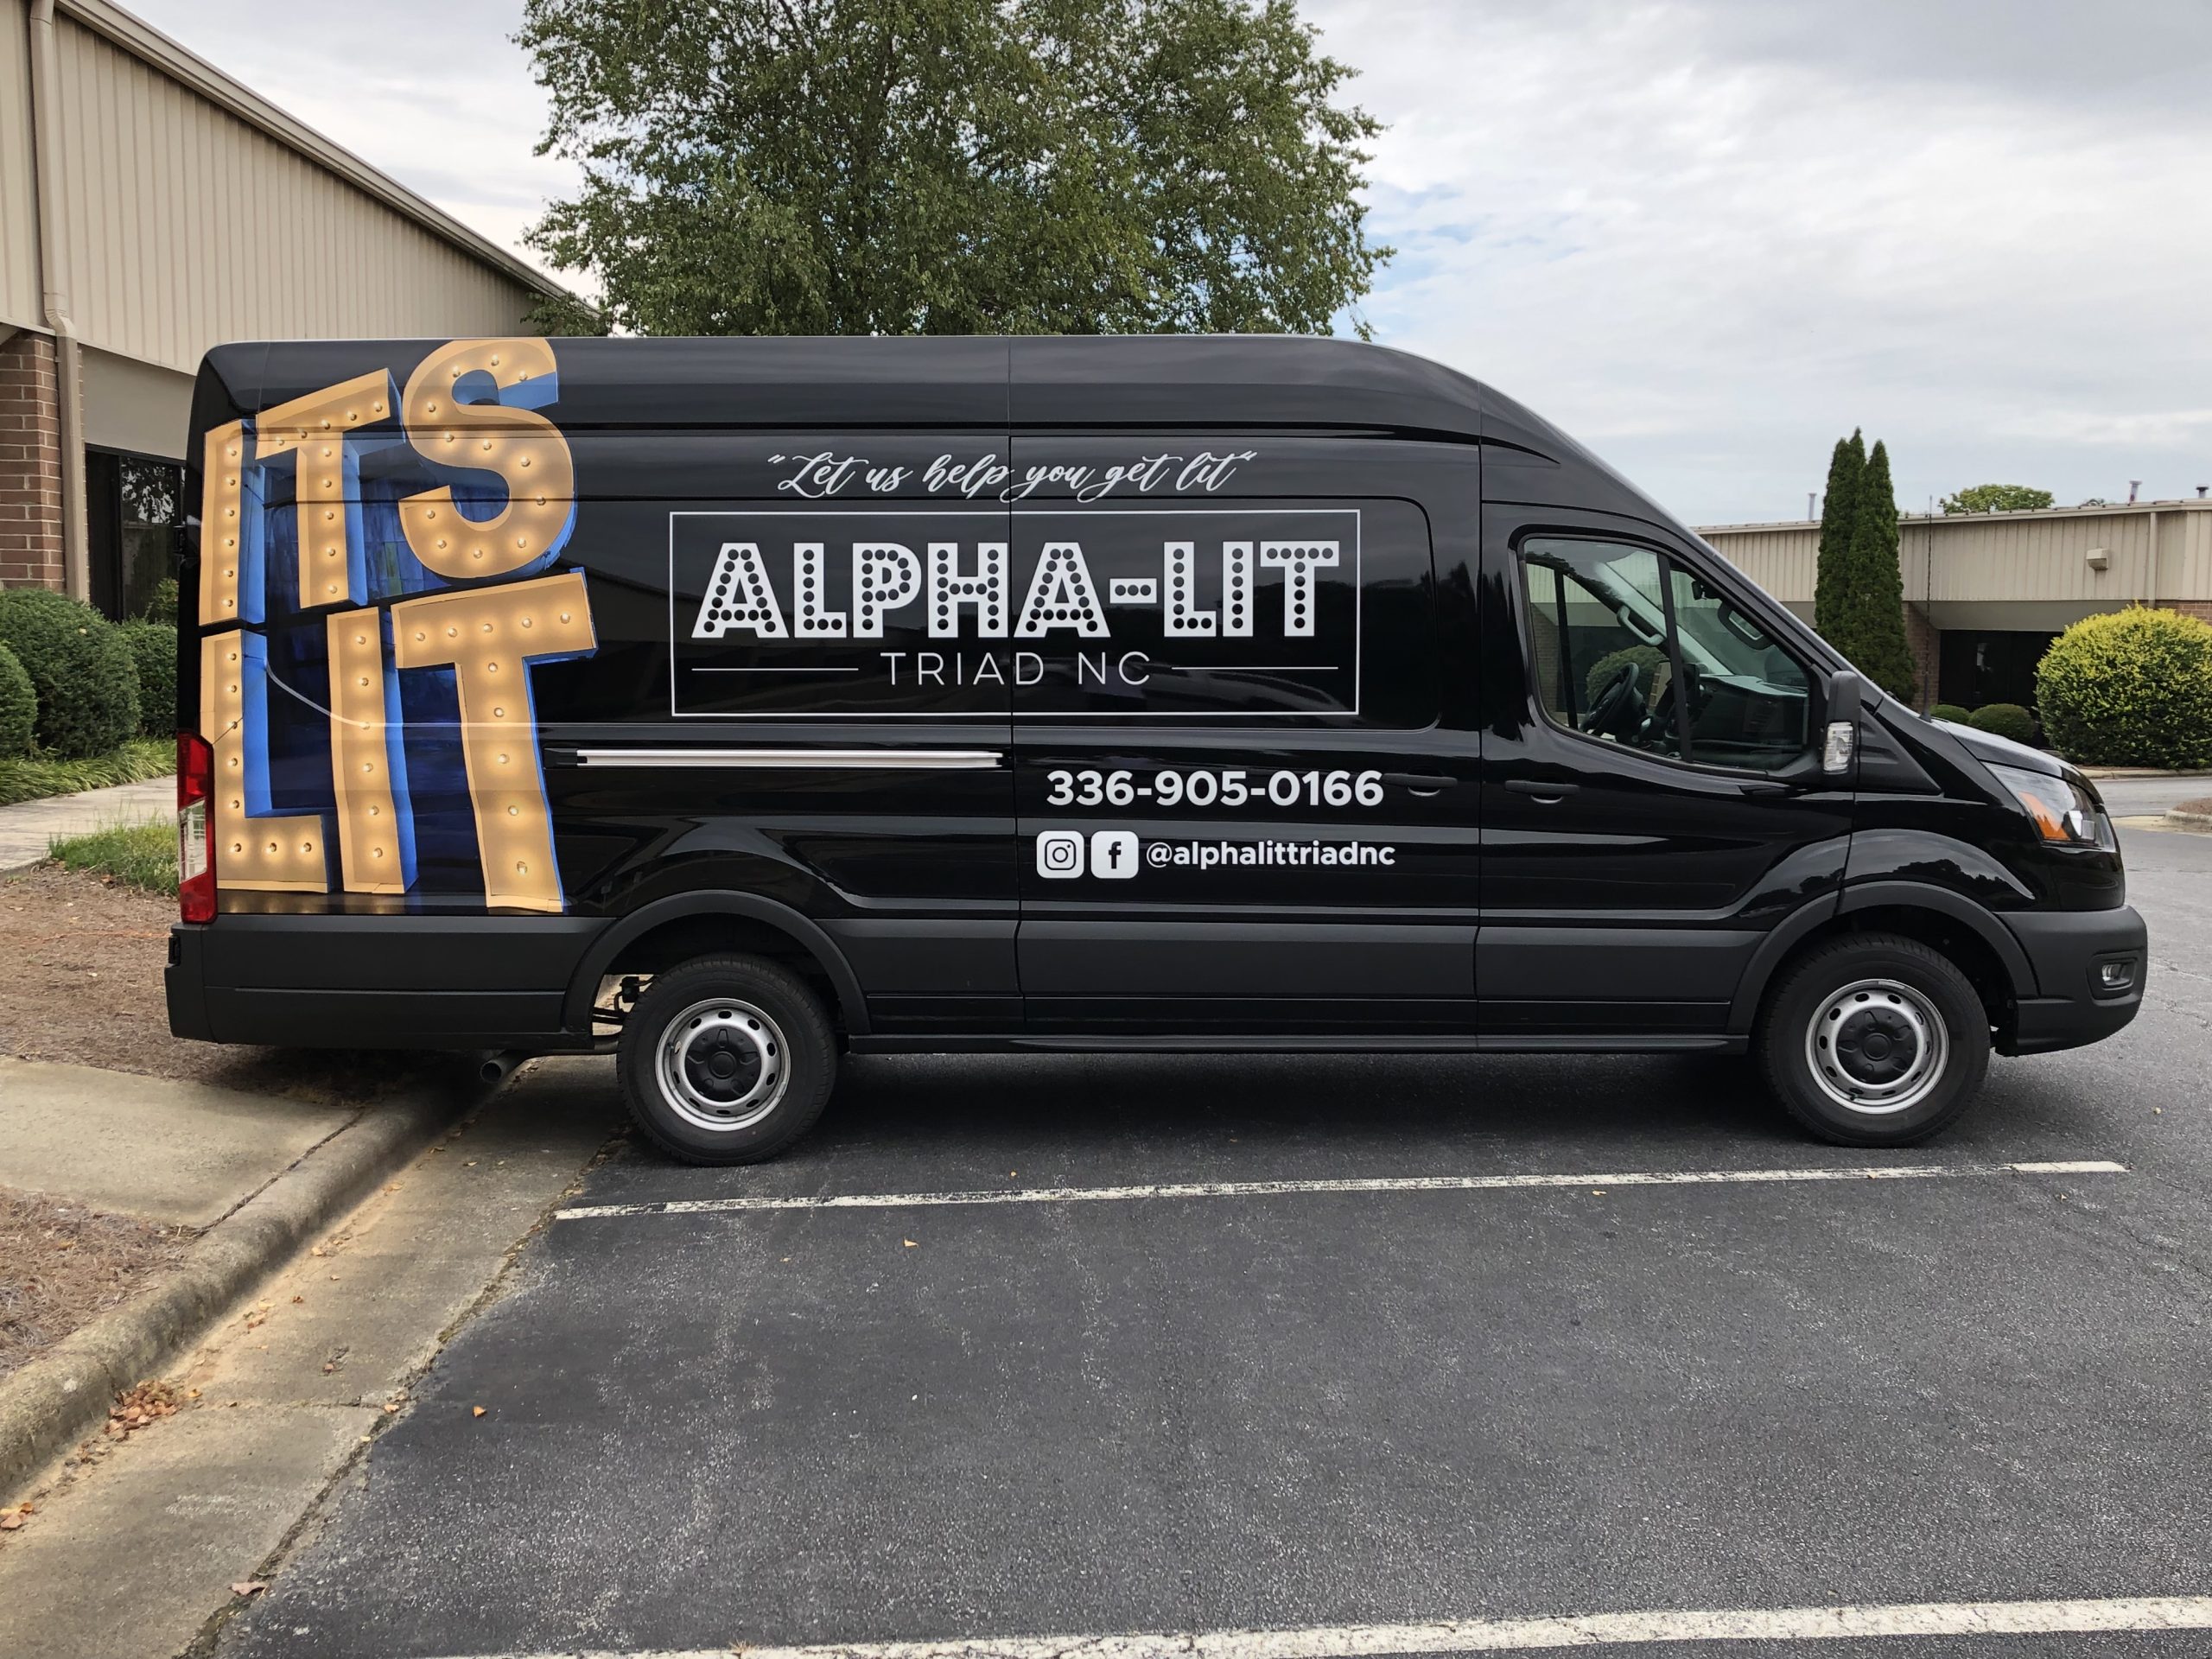 Alpha-Lit Triad Custom Van Wrap In Greensboro, NC - The Carolina Signsmith